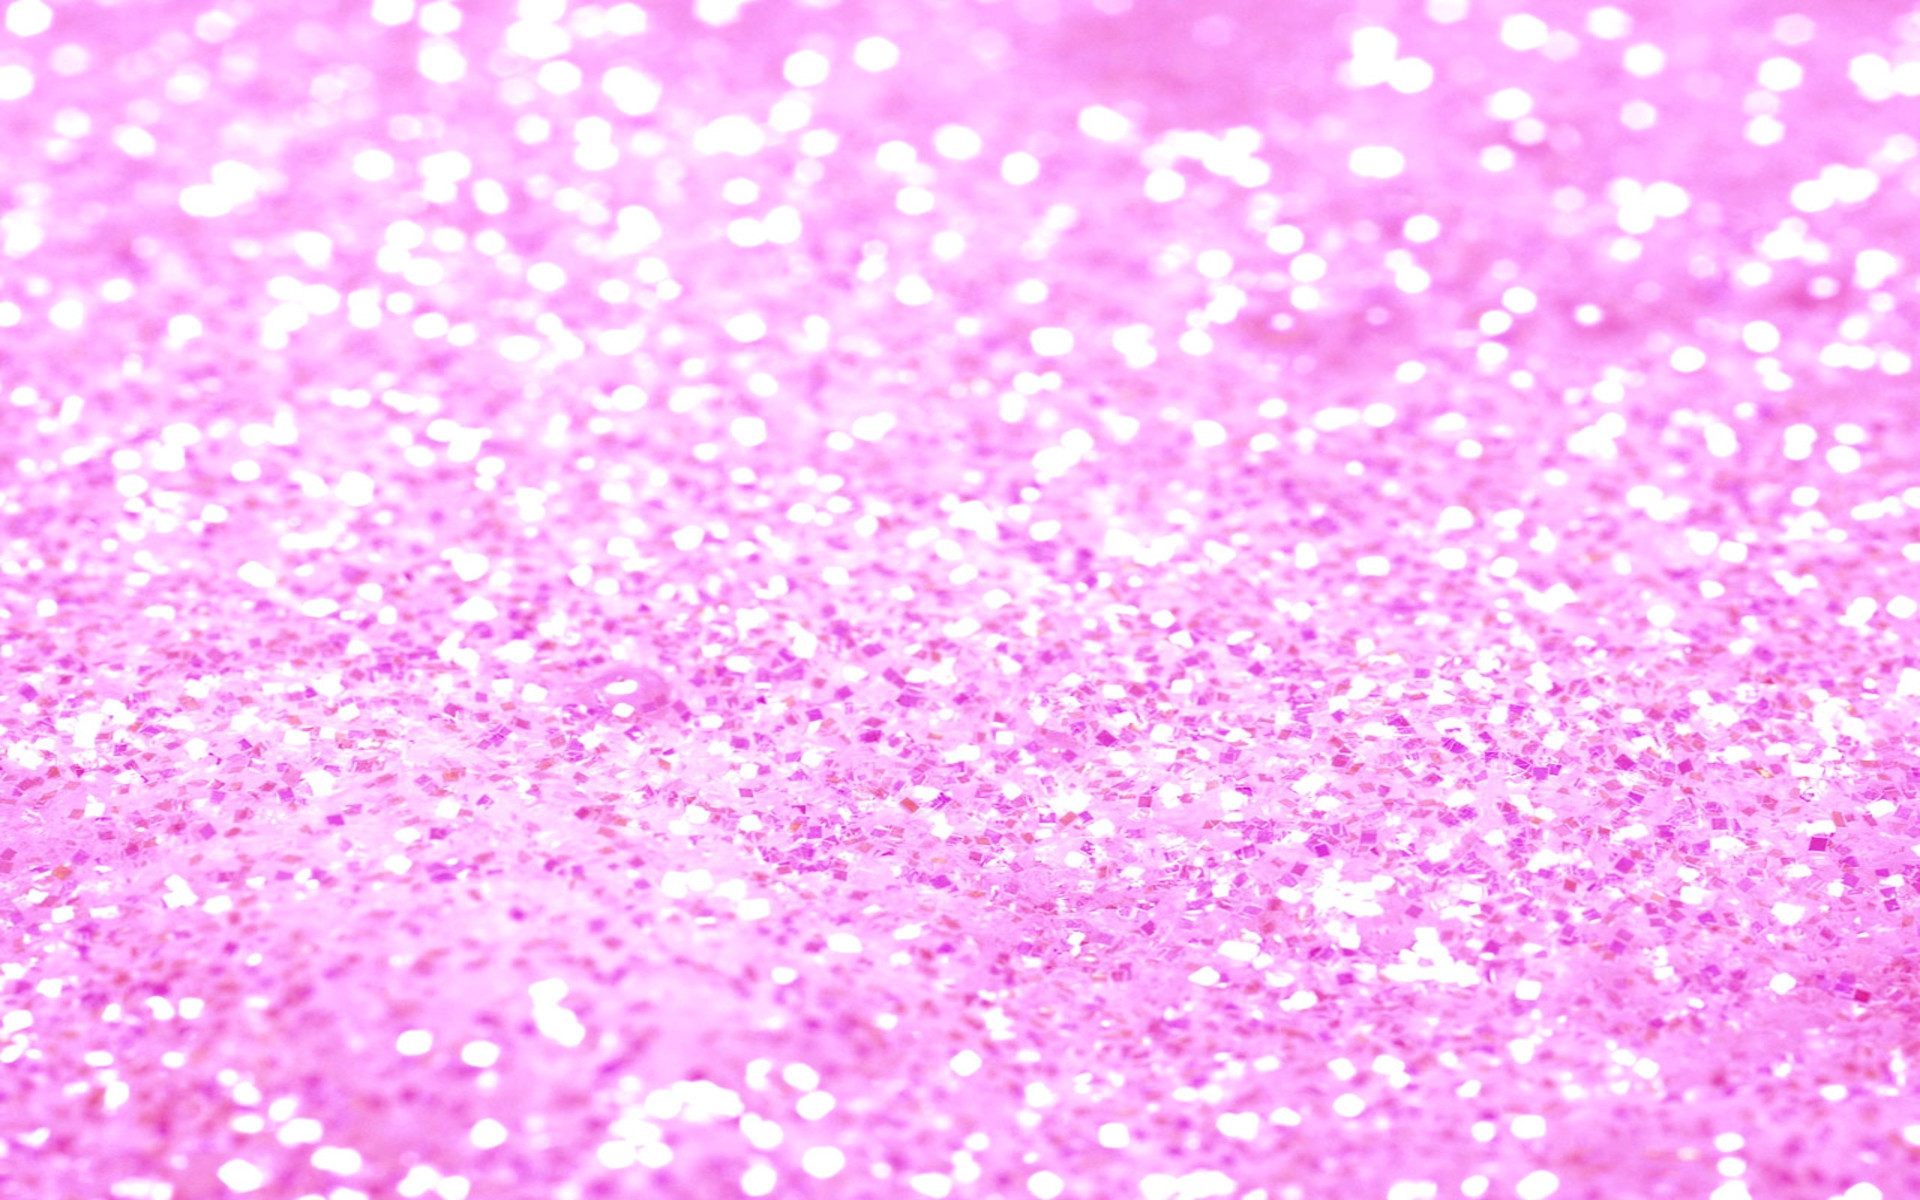 Pink Glitter Backgrounds | PixelsTalk.Net
